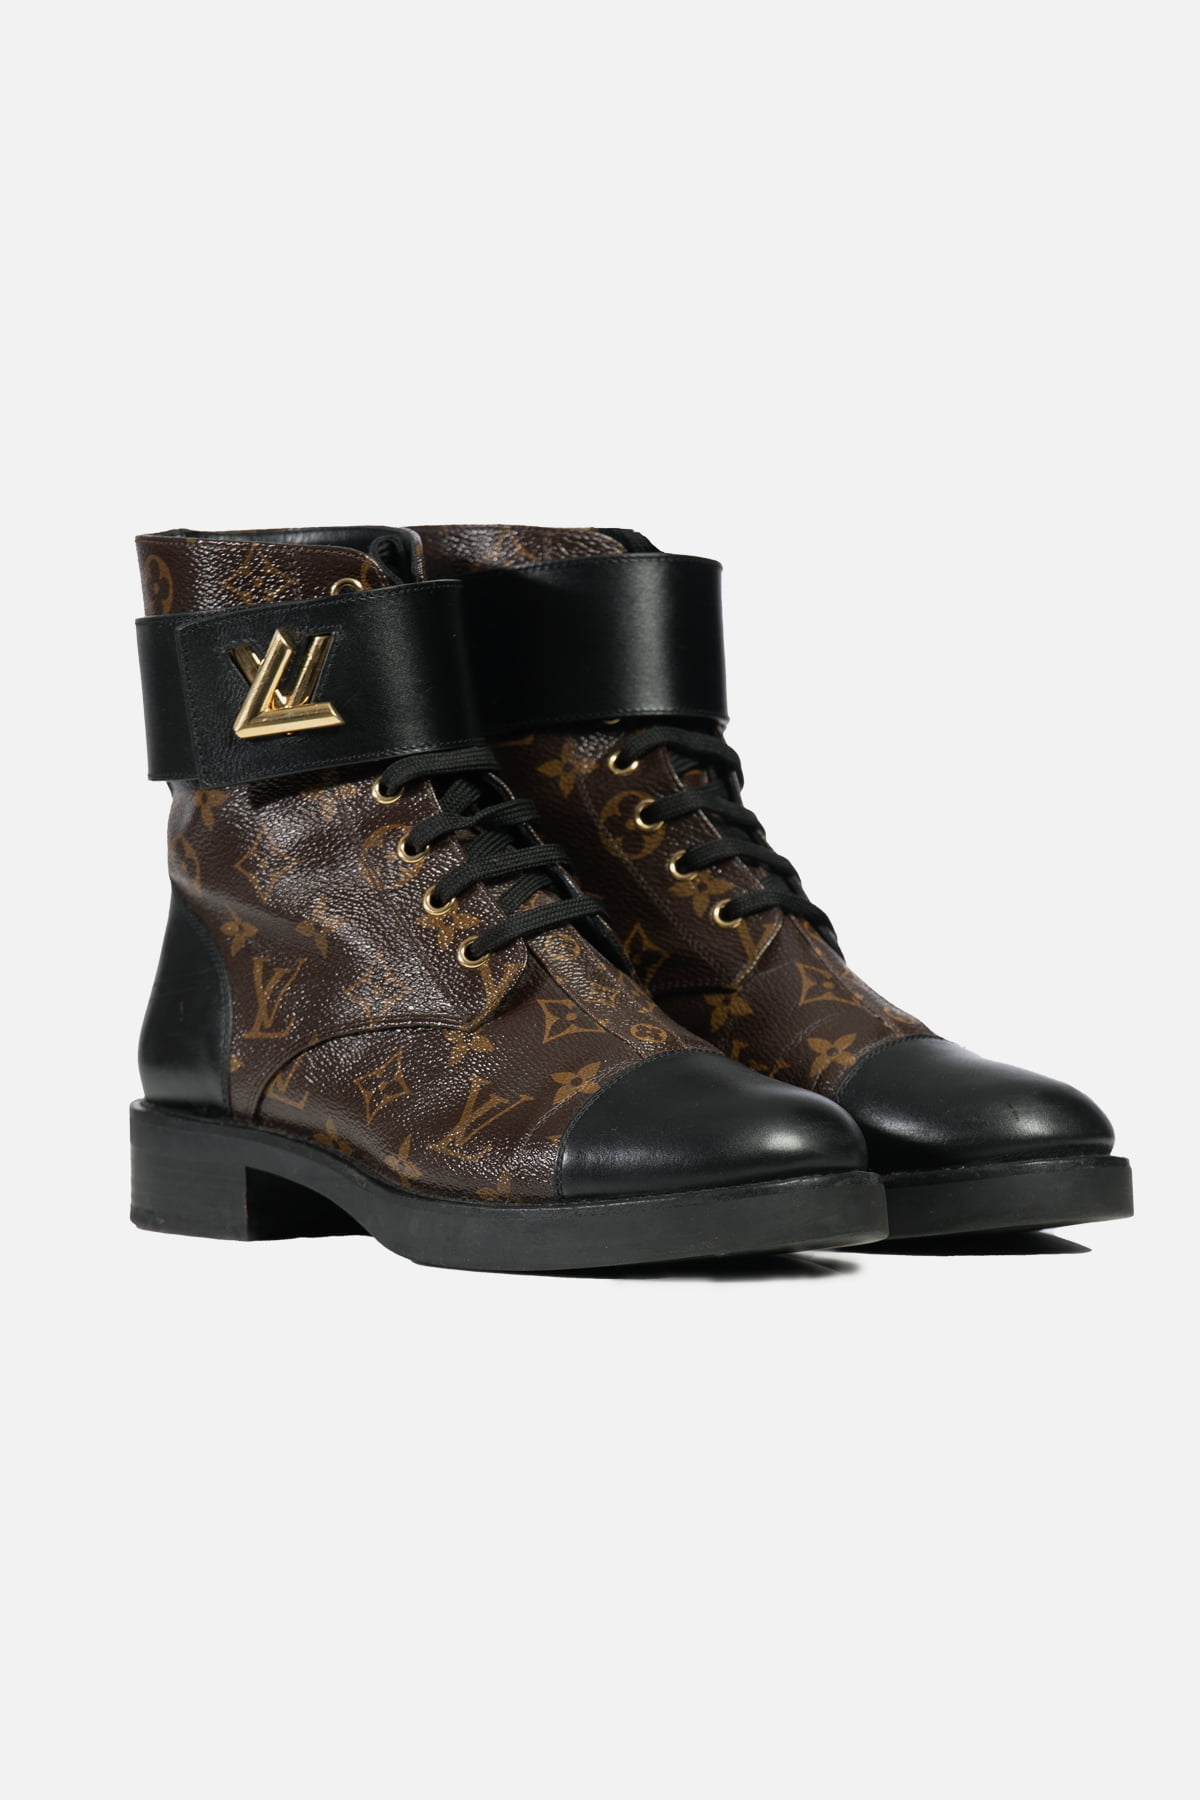 LV Territory Flat Ranger  Louis vuitton, Shoe boots, Boots